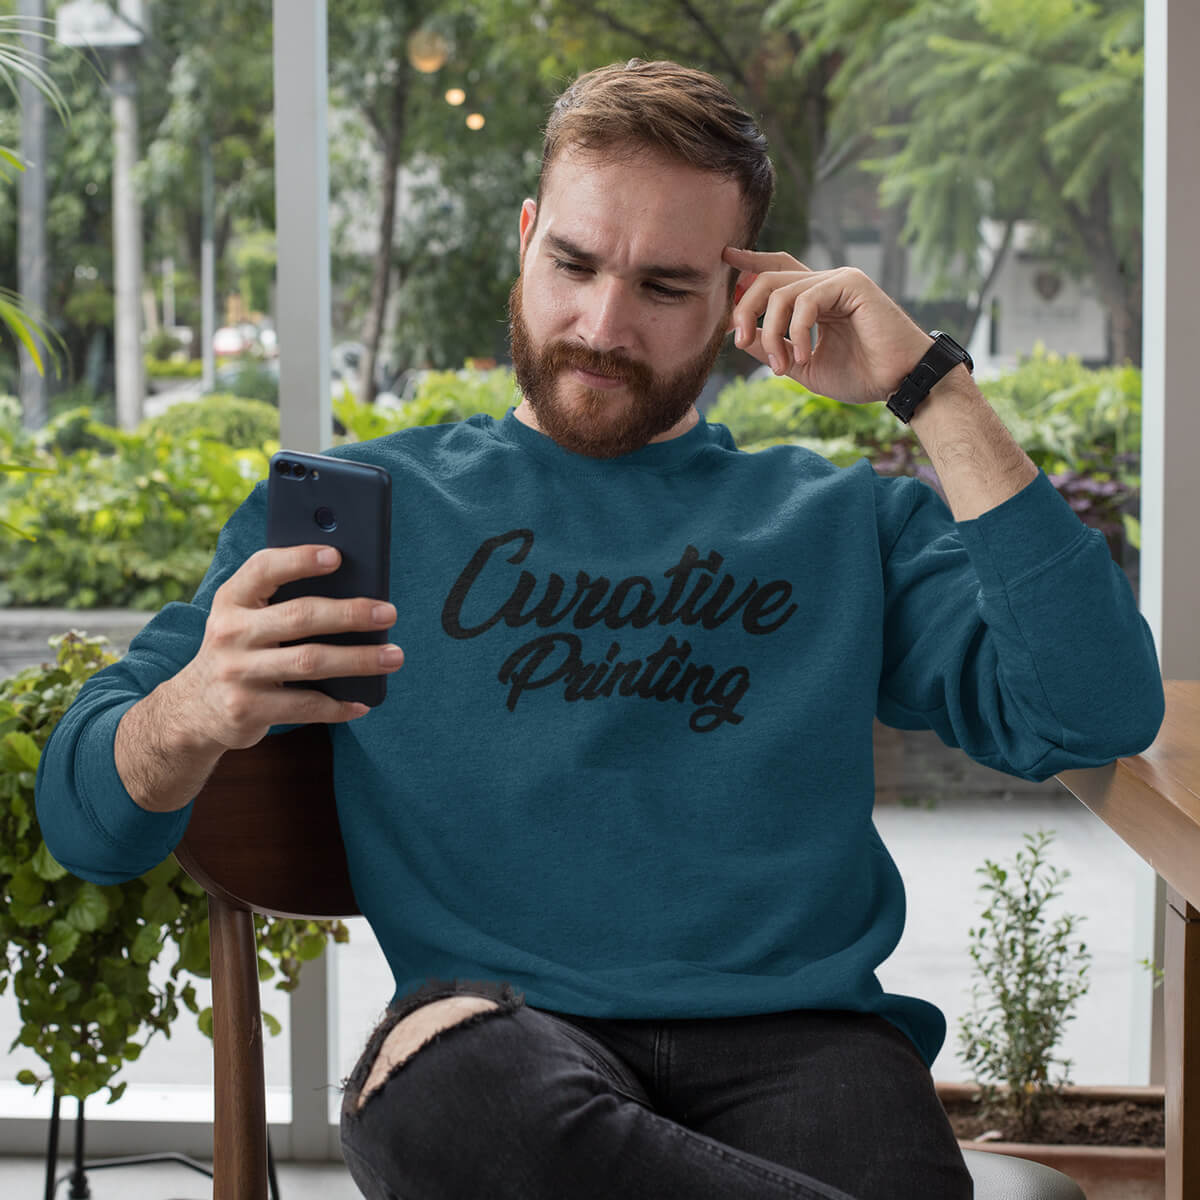 Lounging man wearing Curative Printing crewneck sweatshirt